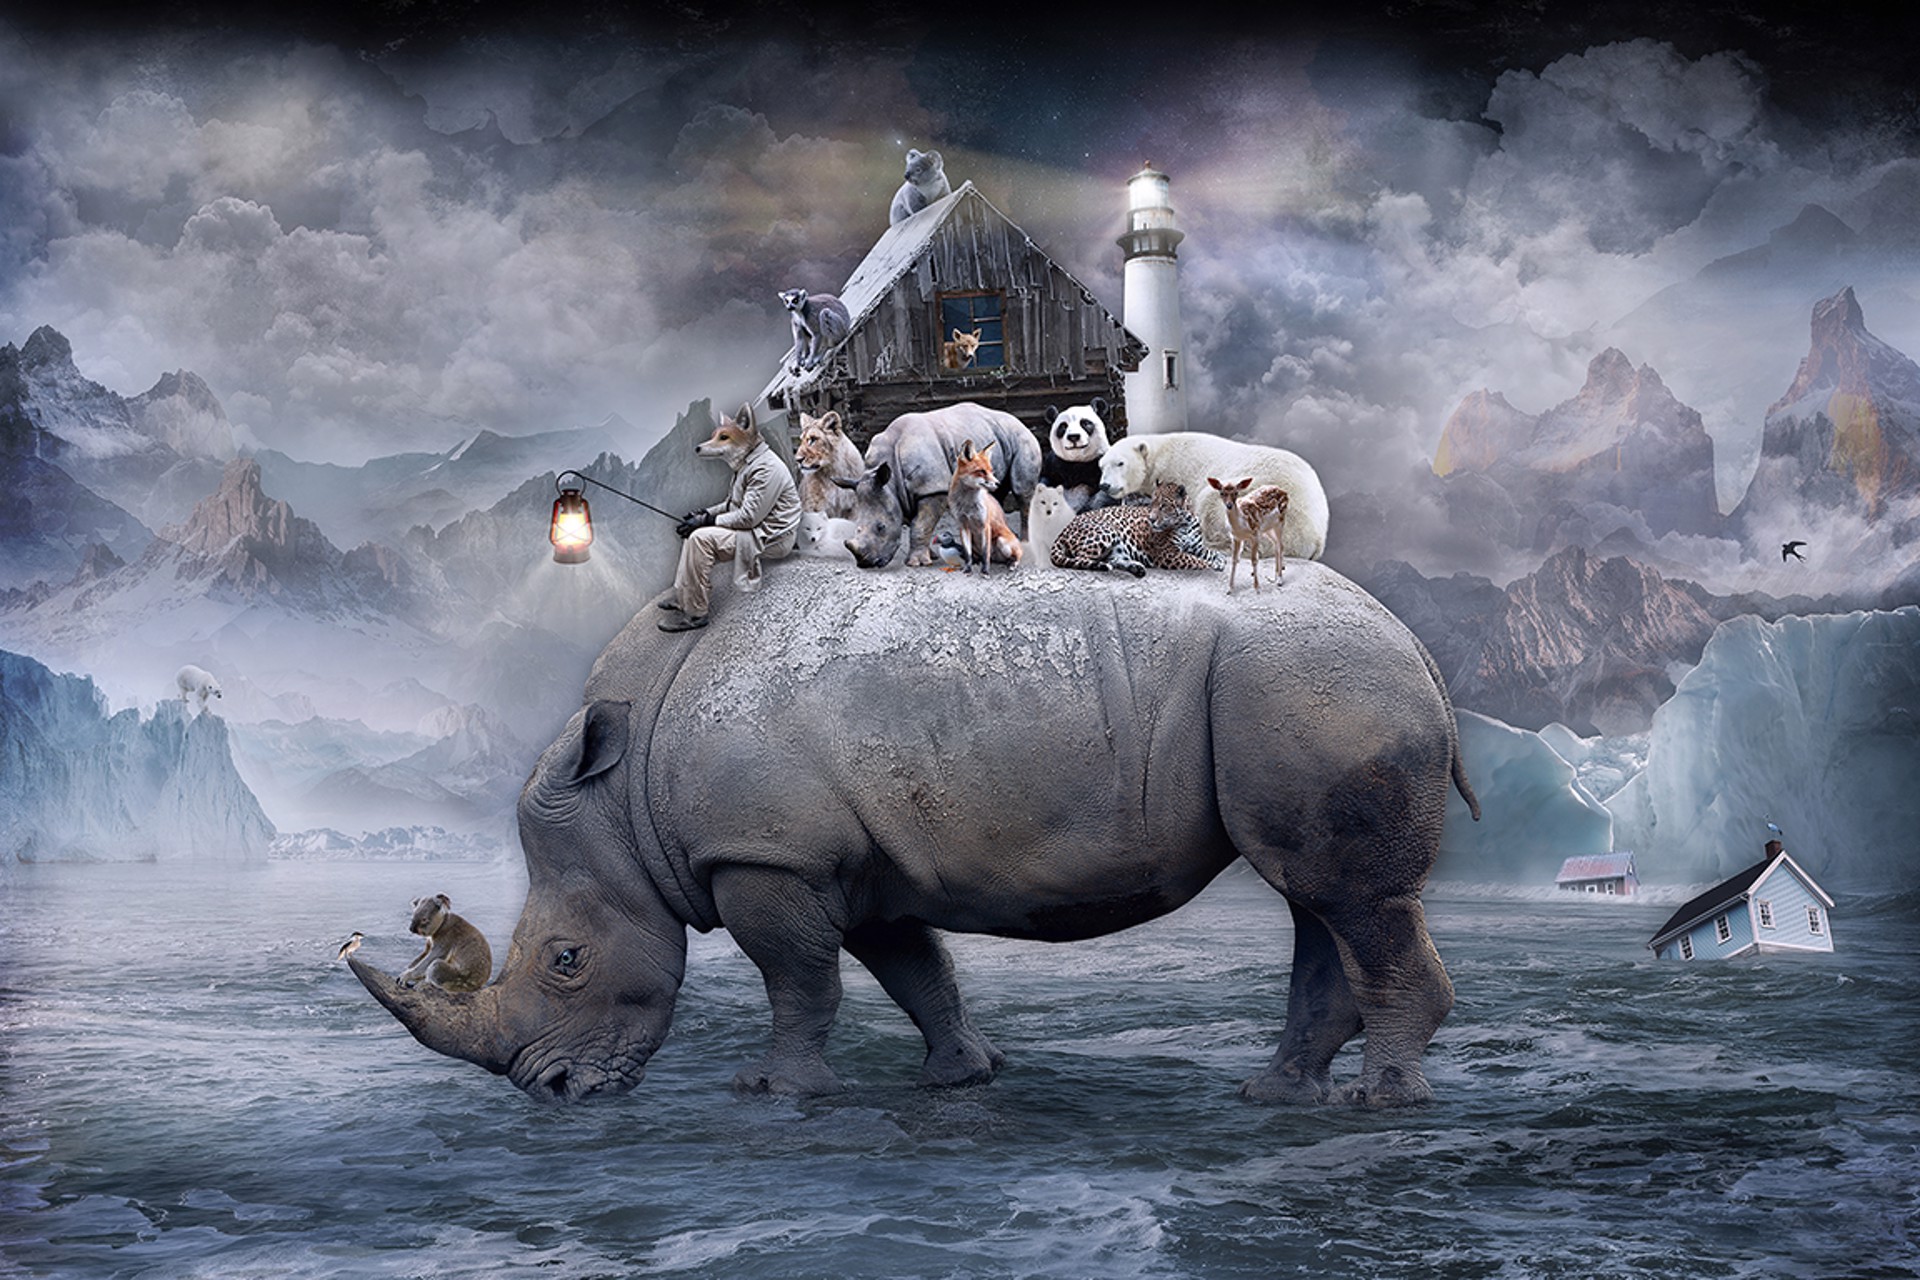 Shelter - Spirit of the Rhino by Marcin Owczarek